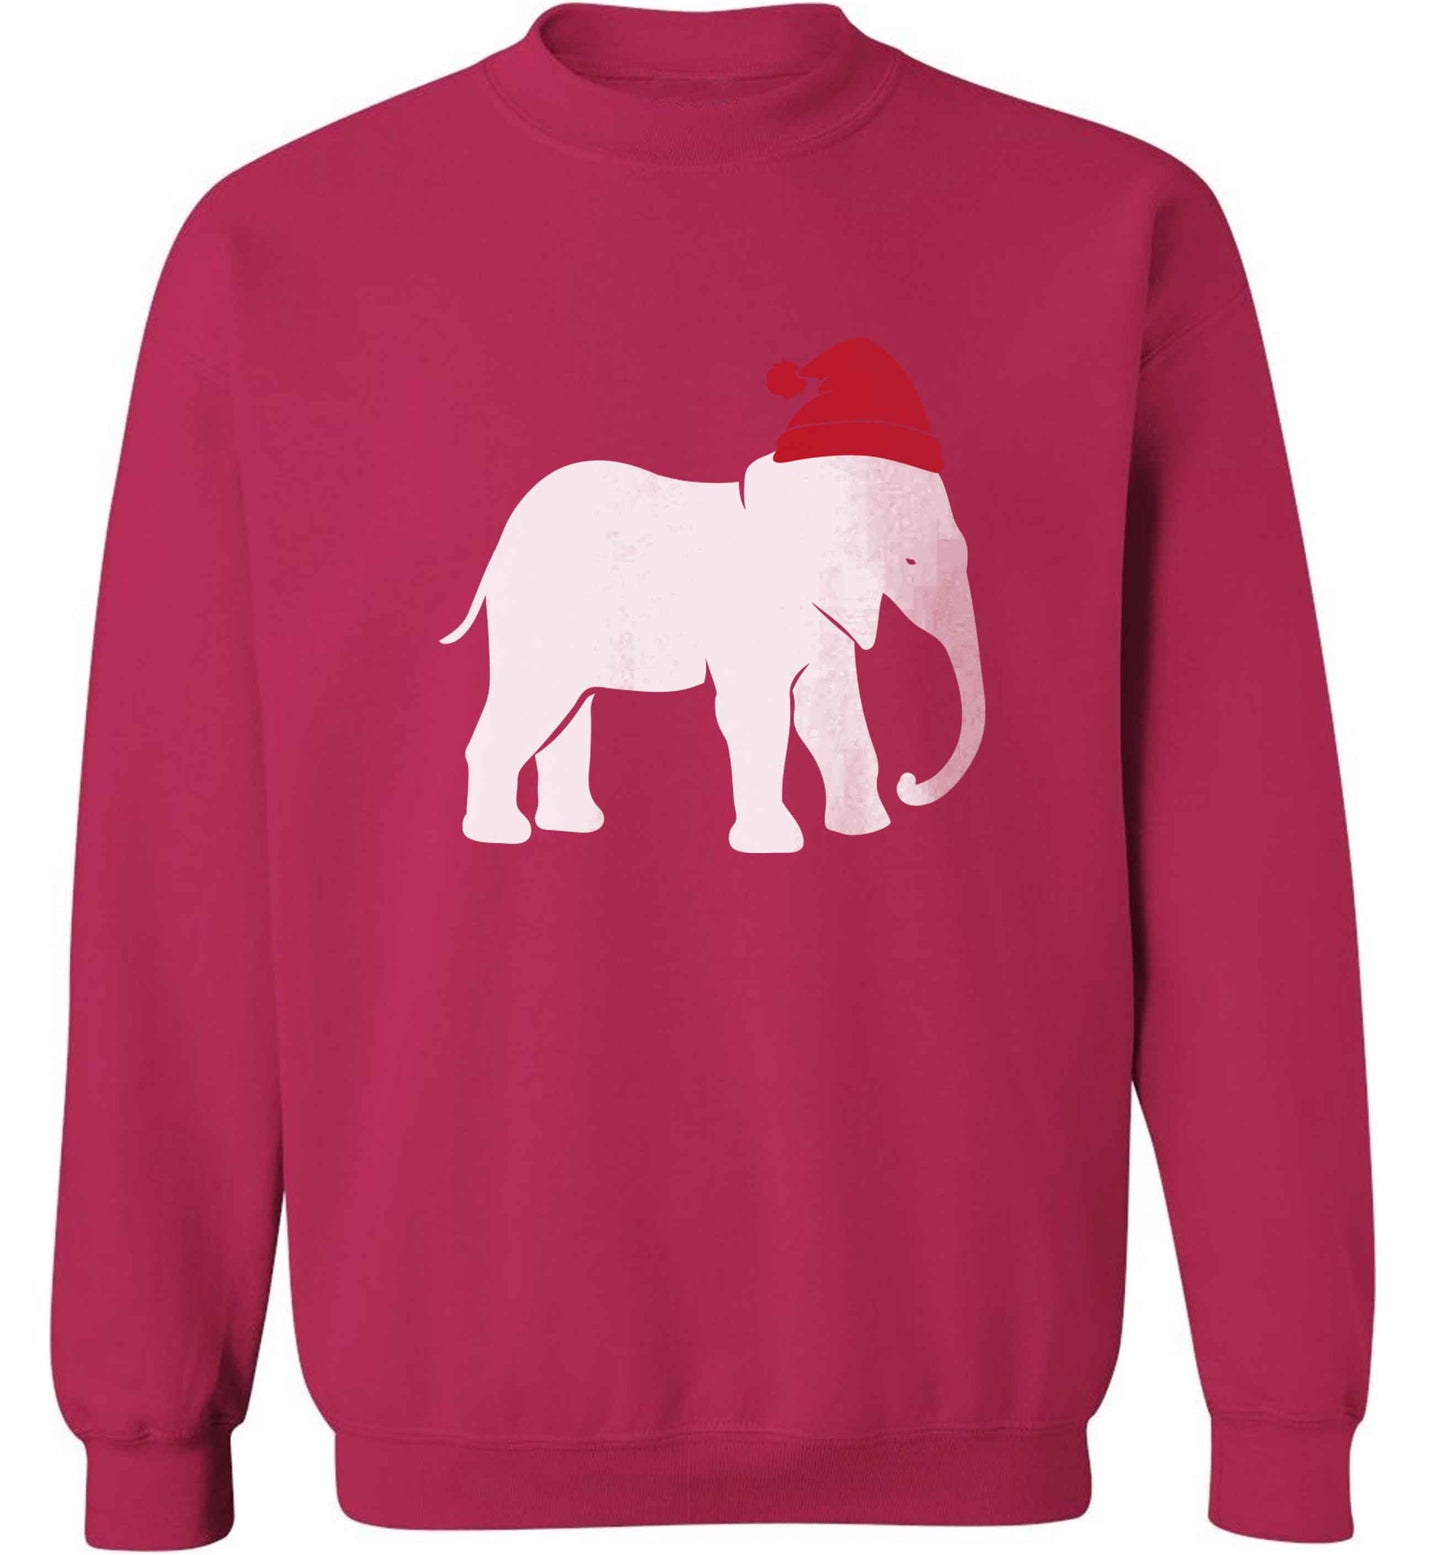 Pink elephant Santa adult's unisex pink sweater 2XL